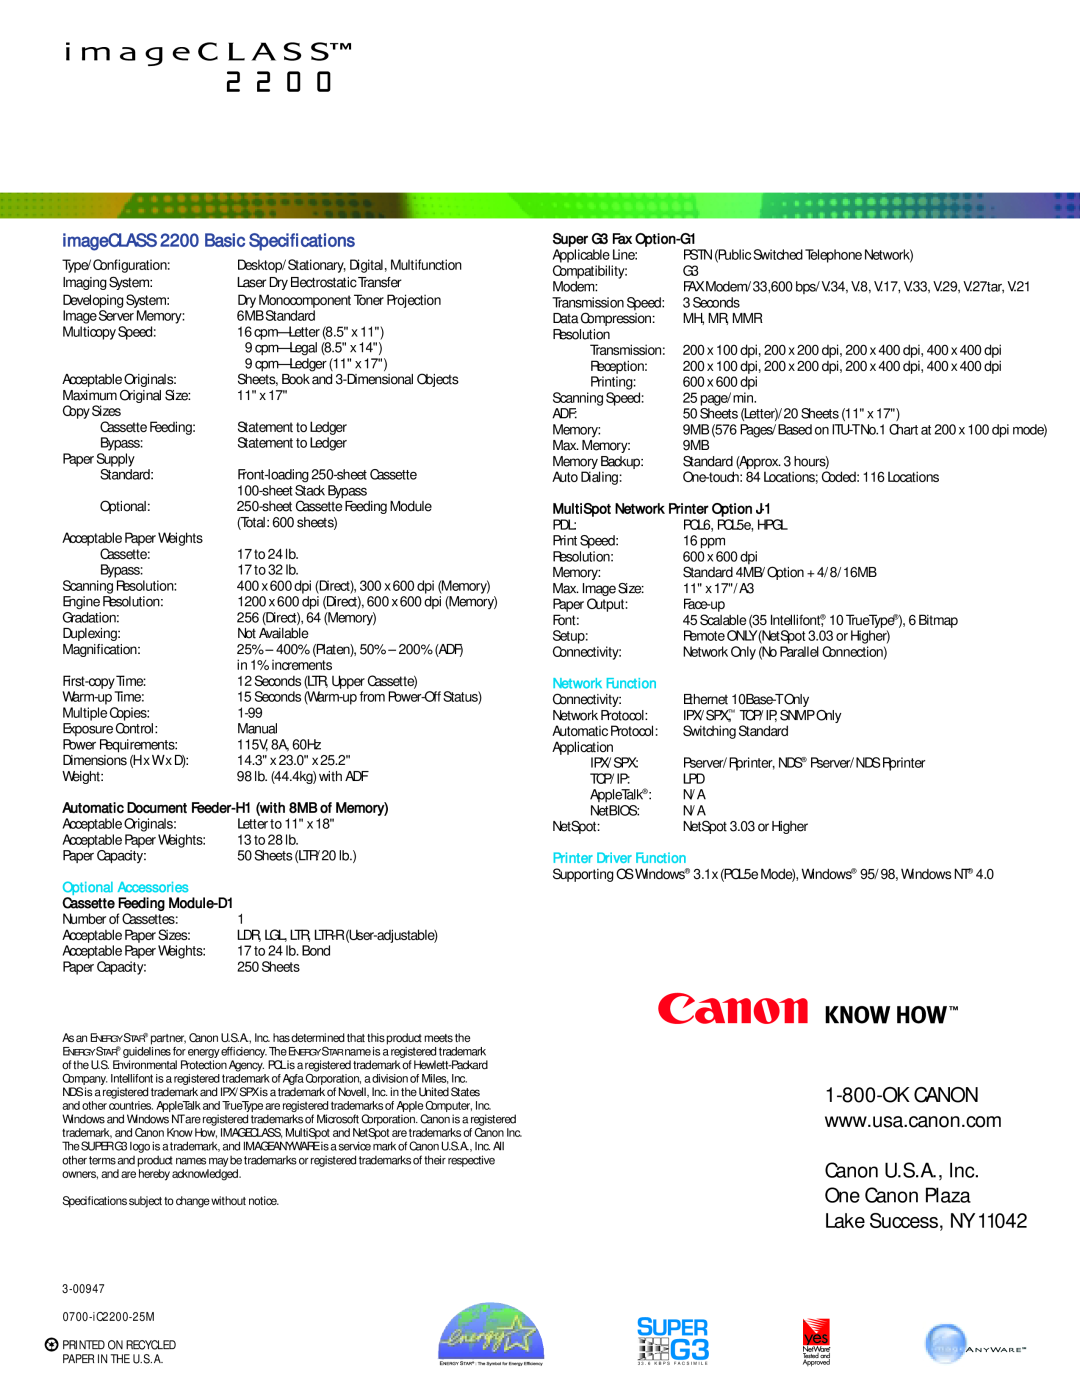 Canon 0700-iC2200-25M manual Canon U.S.A., Inc One Canon Plaza Lake Success, NY, imageCLASS 2200 Basic Speciﬁcations 